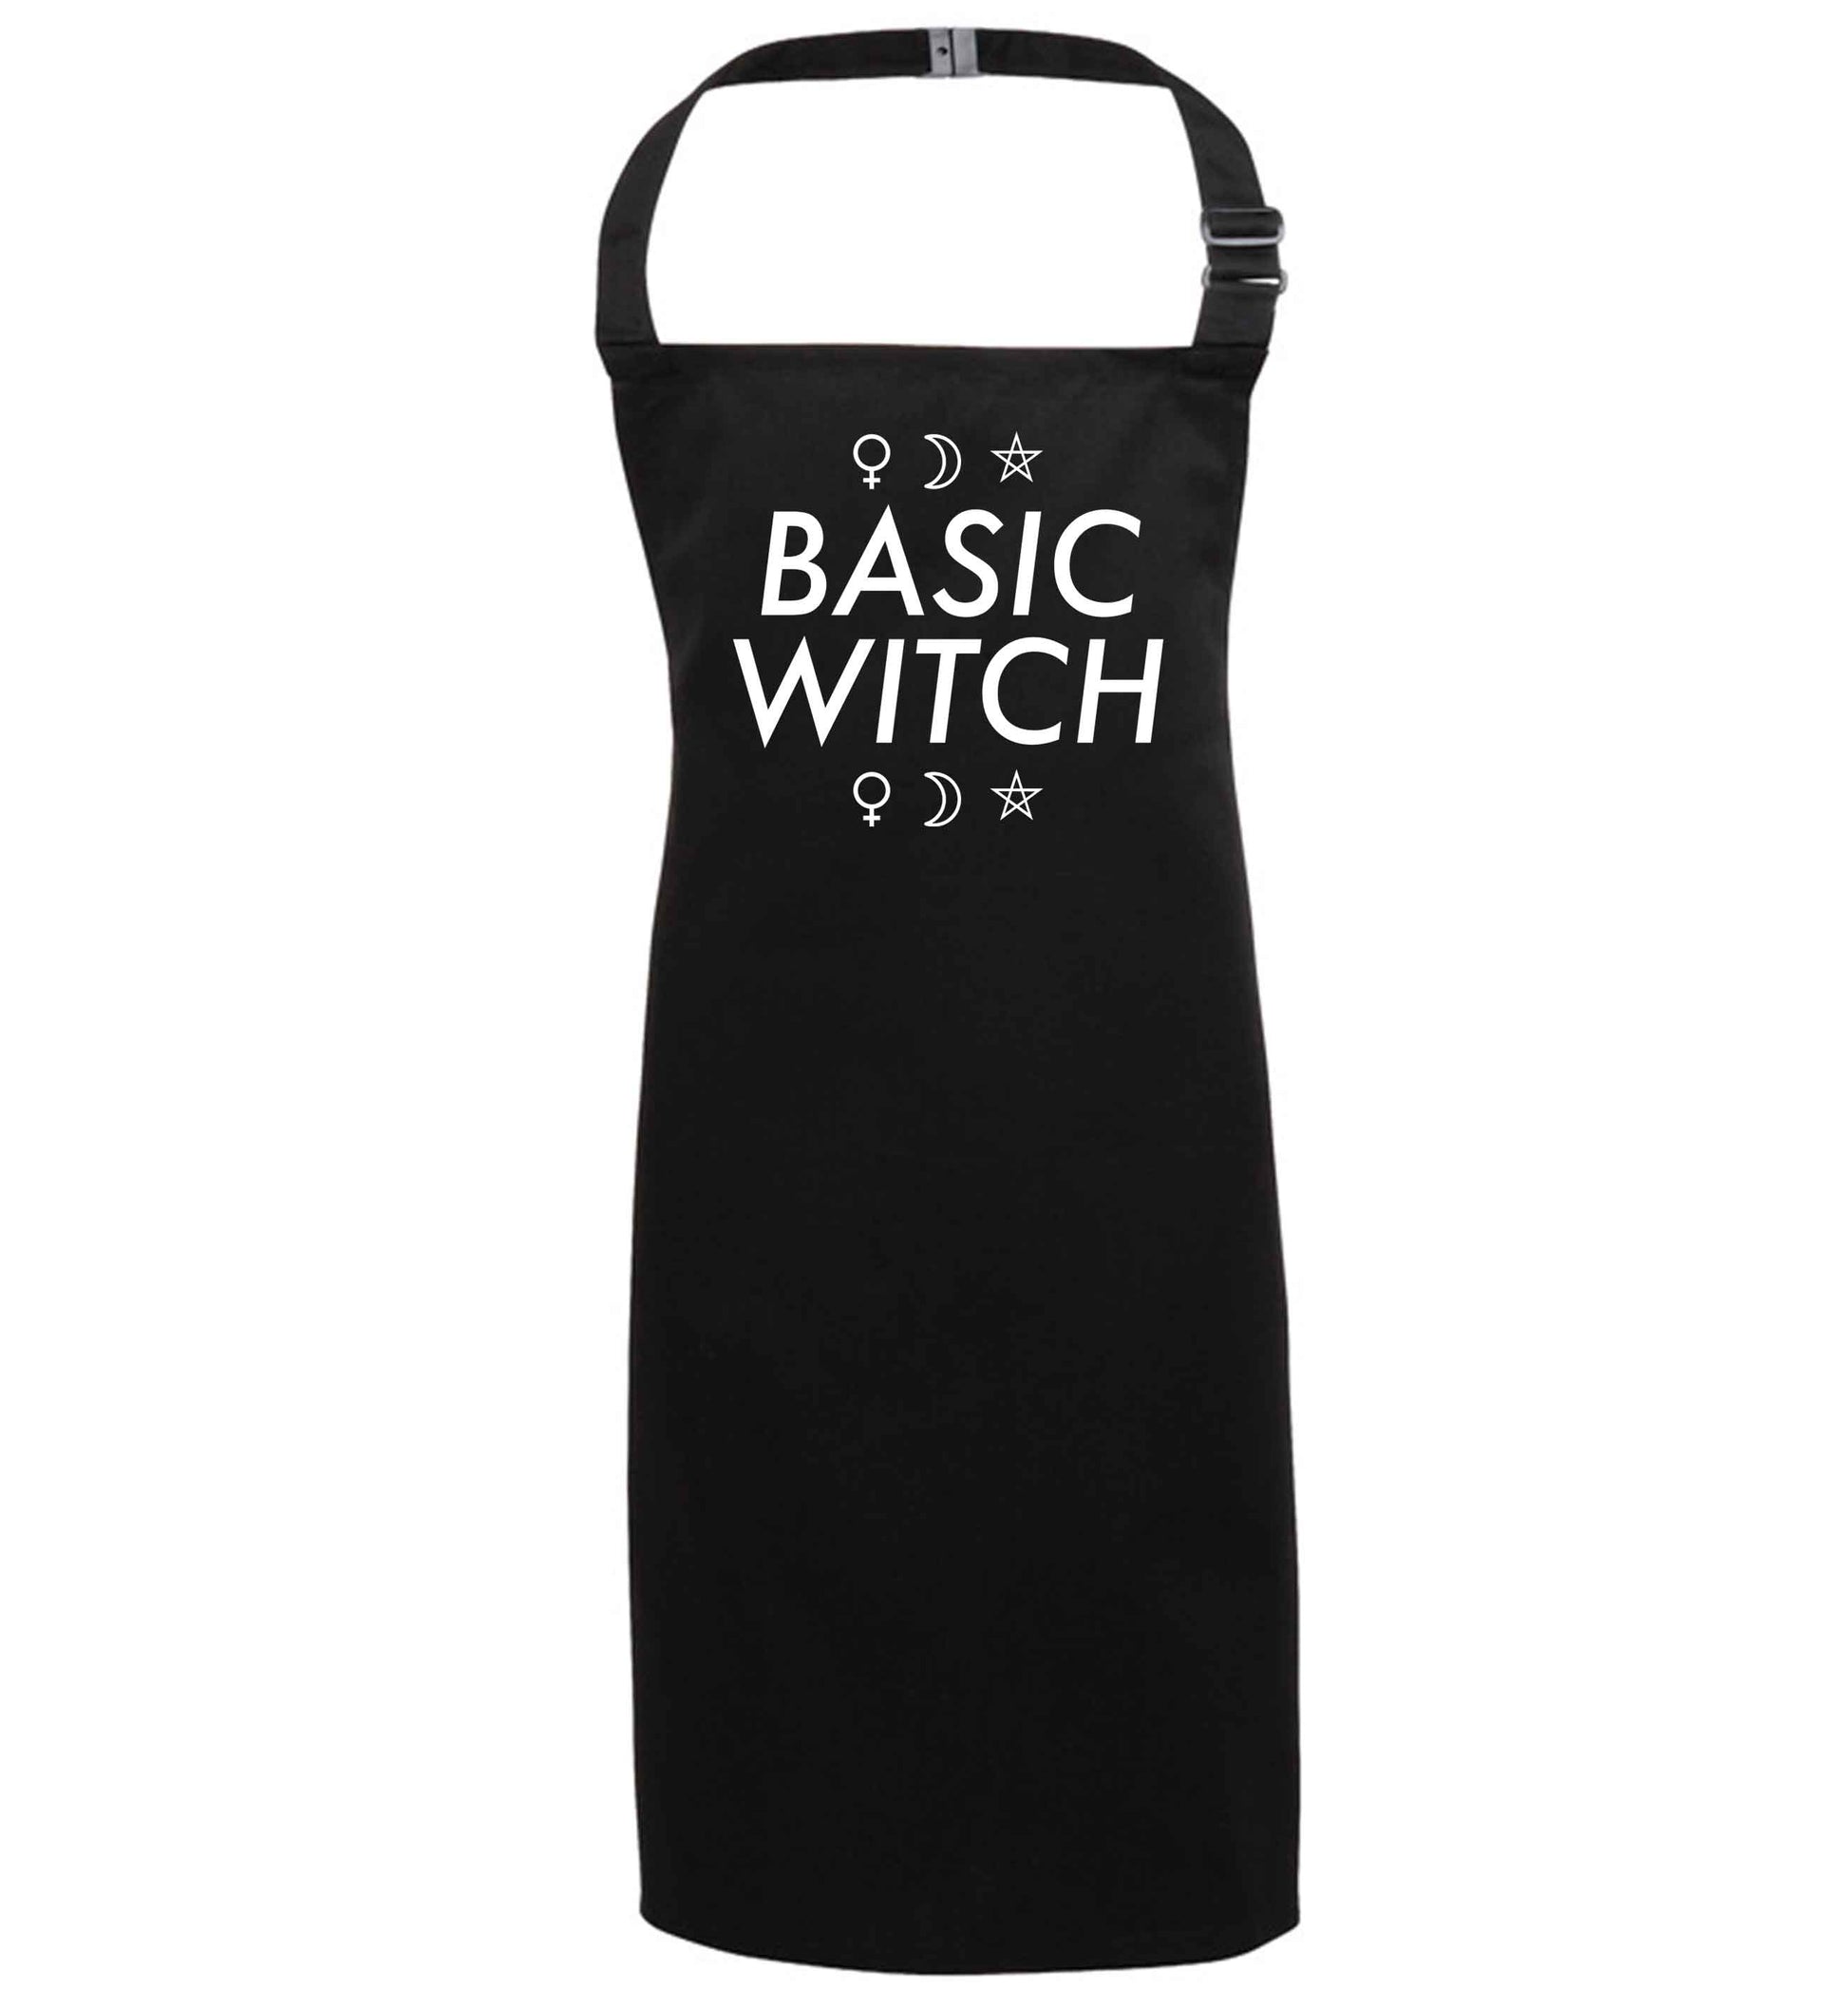 Basic witch 1 black apron 7-10 years